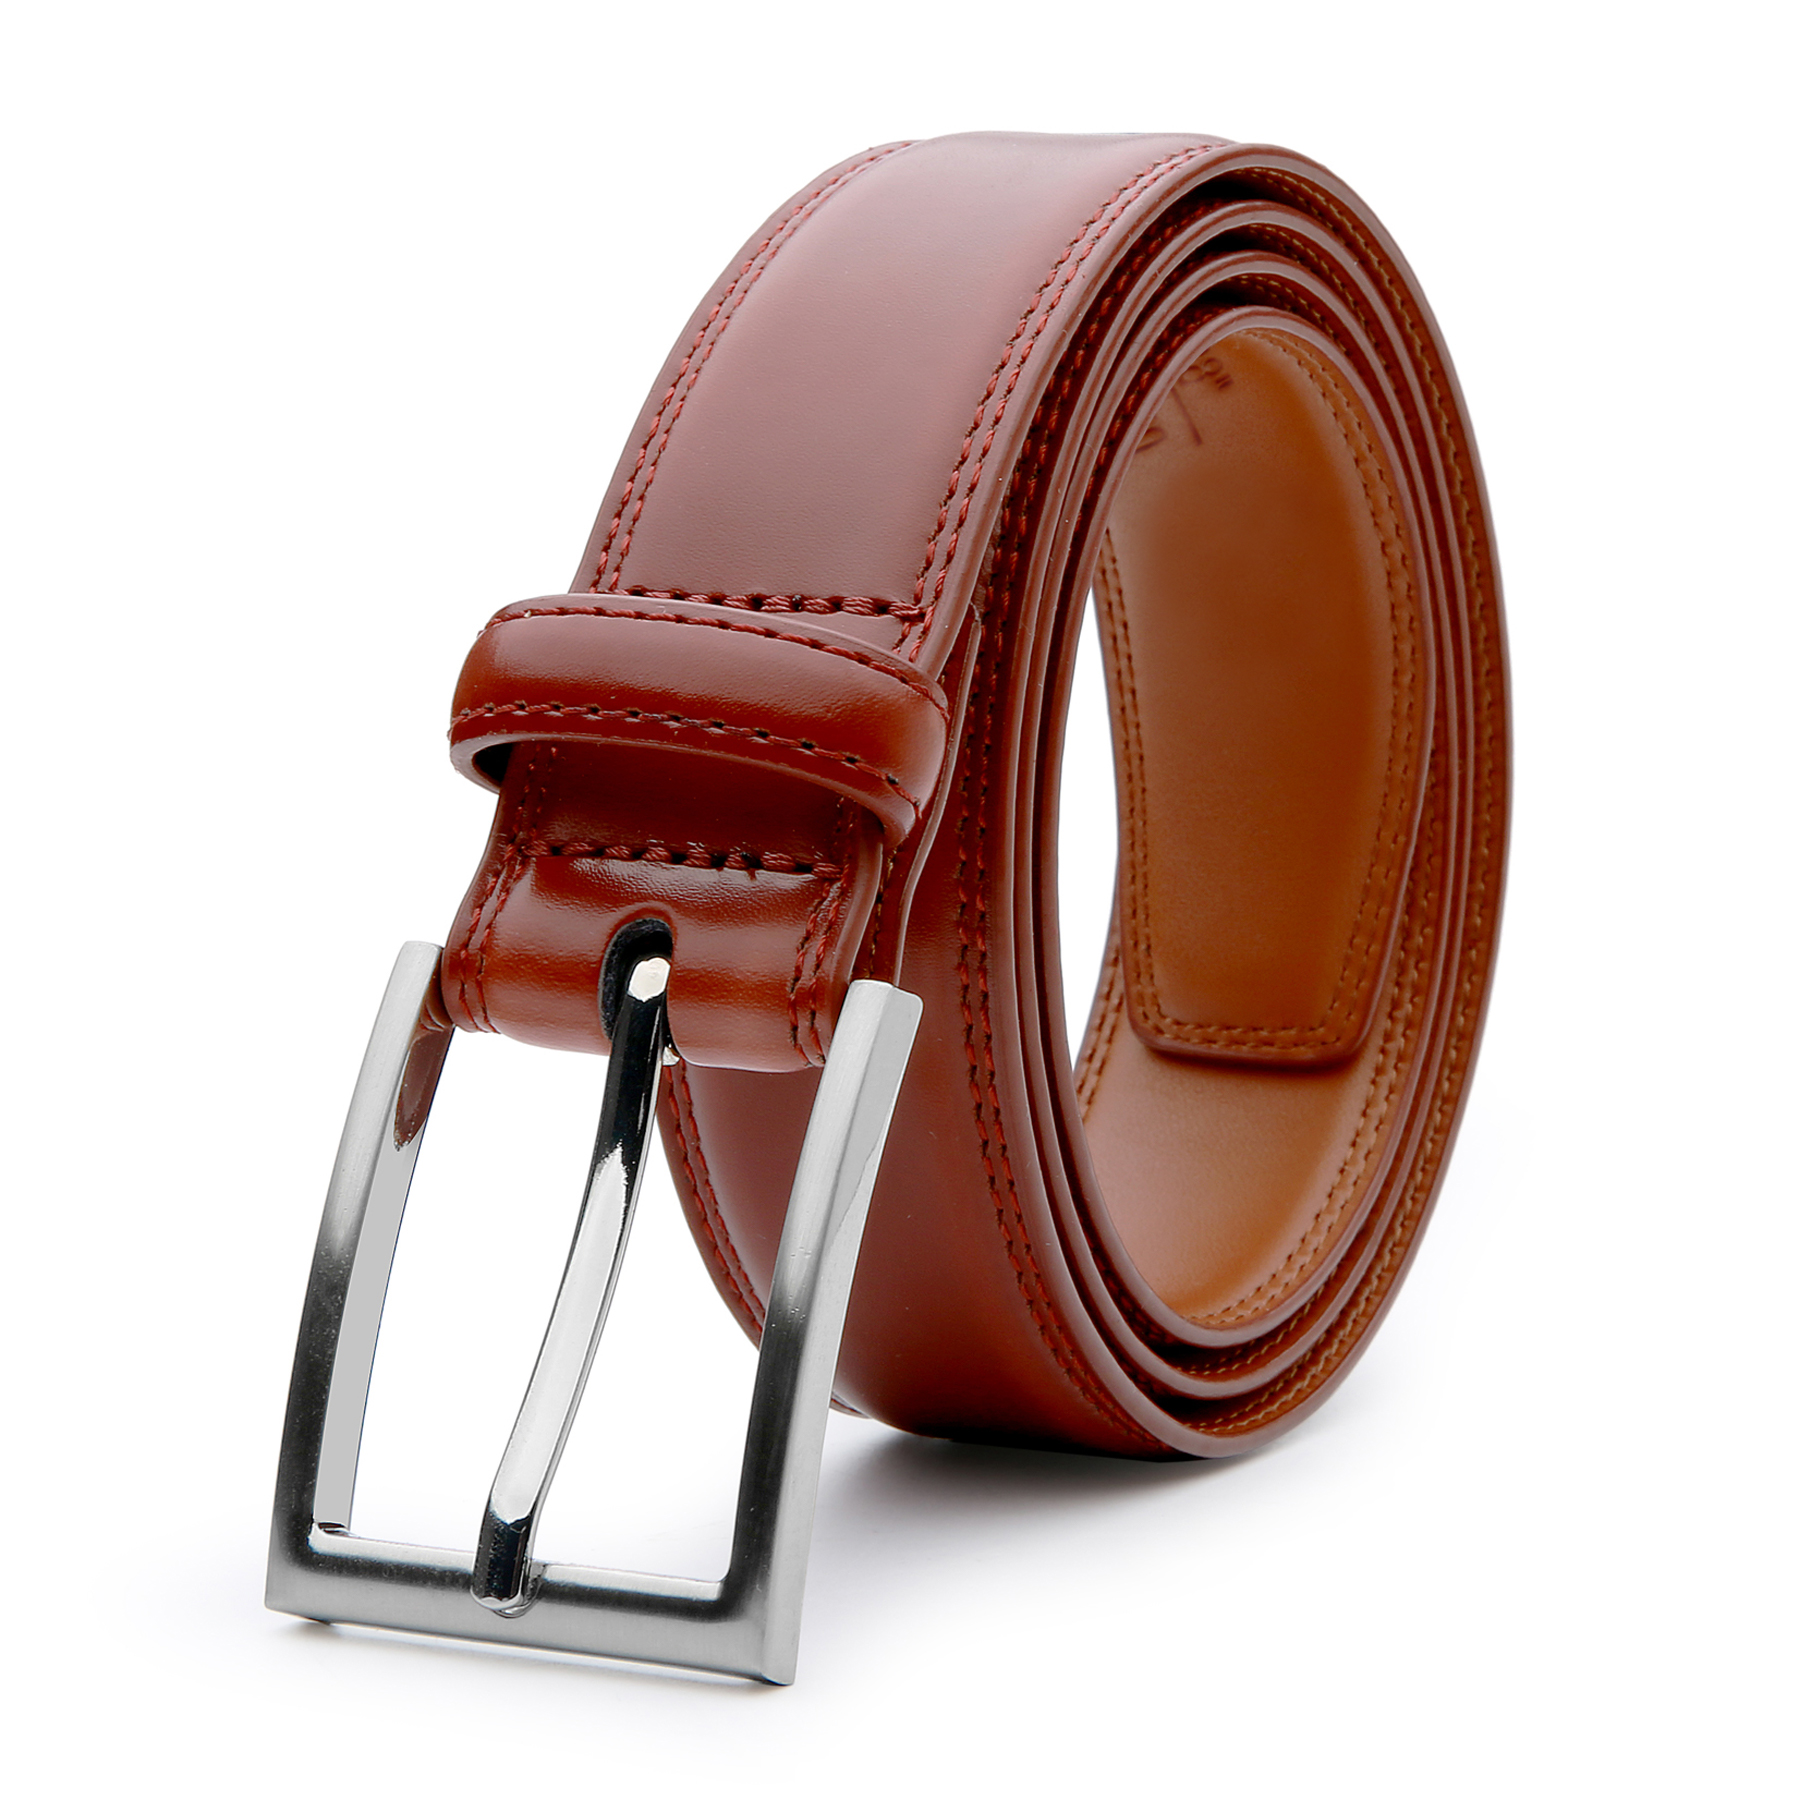  Mens Leather Belt Casual 1 Inch Fashion Trouser Belt 